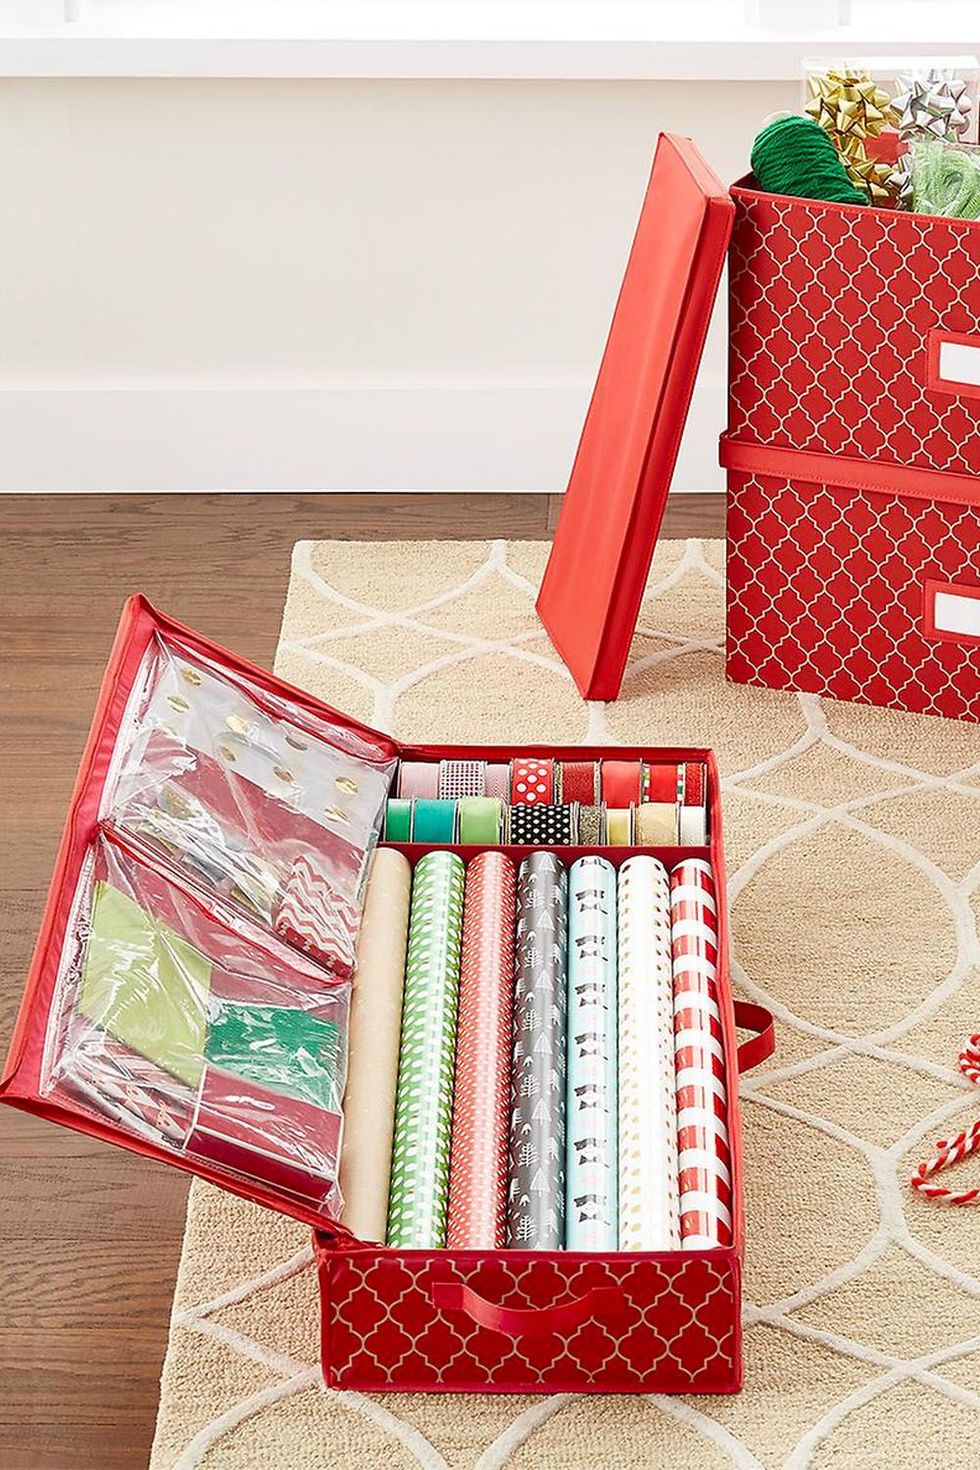 7 Organized Gift Wrapping Storage Ideas